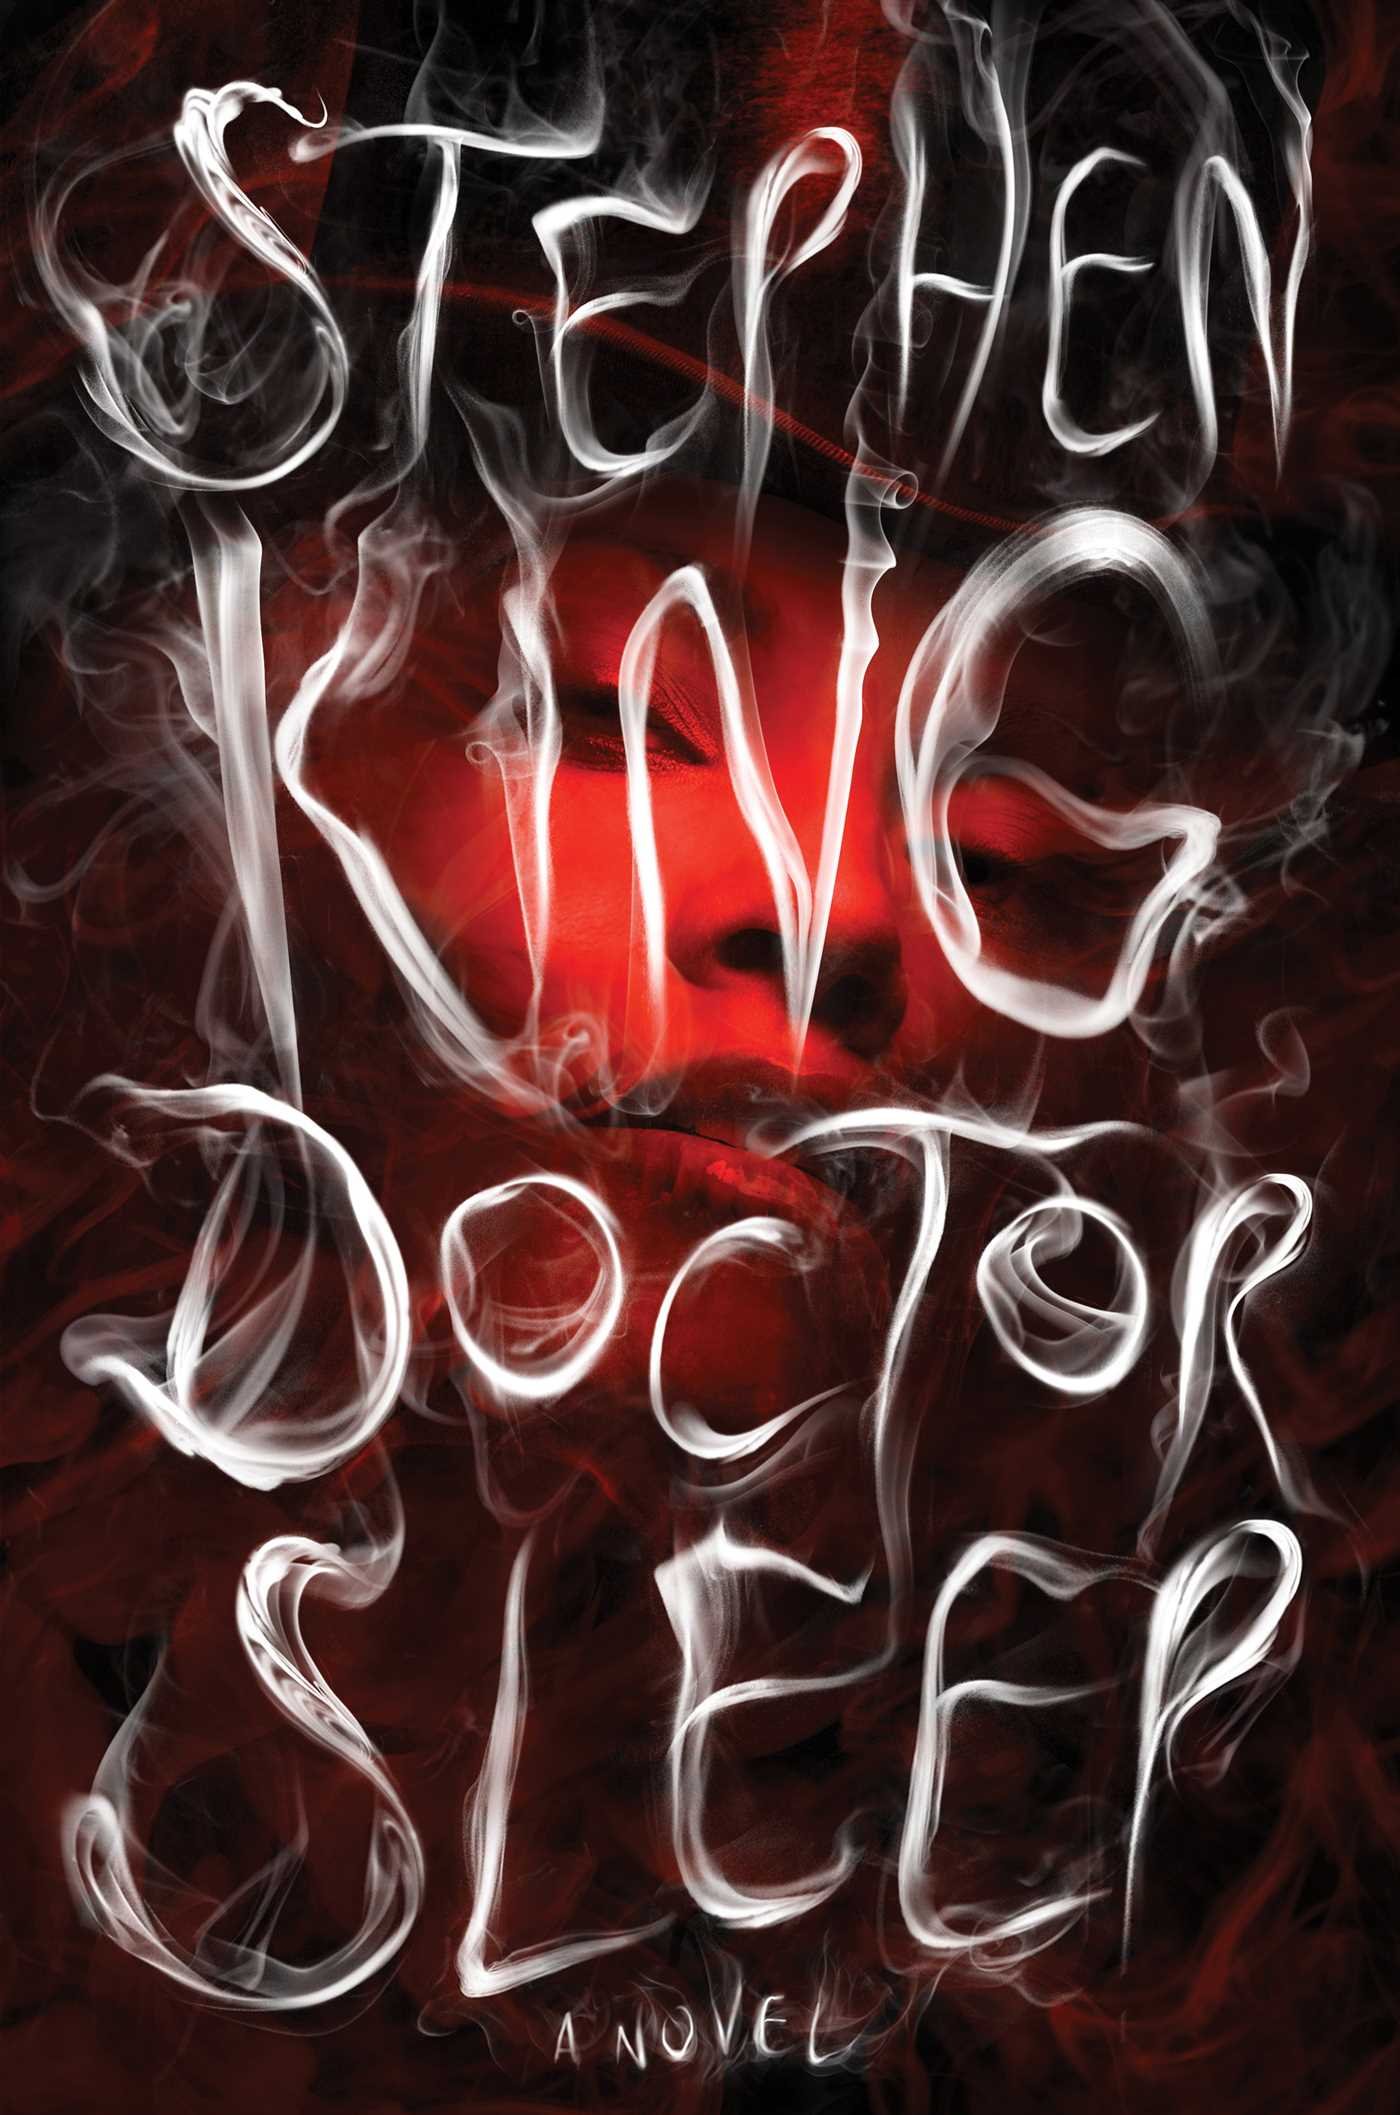 Doctor Sleep (2020) | based on Stephen King 'The Shining' Sequel